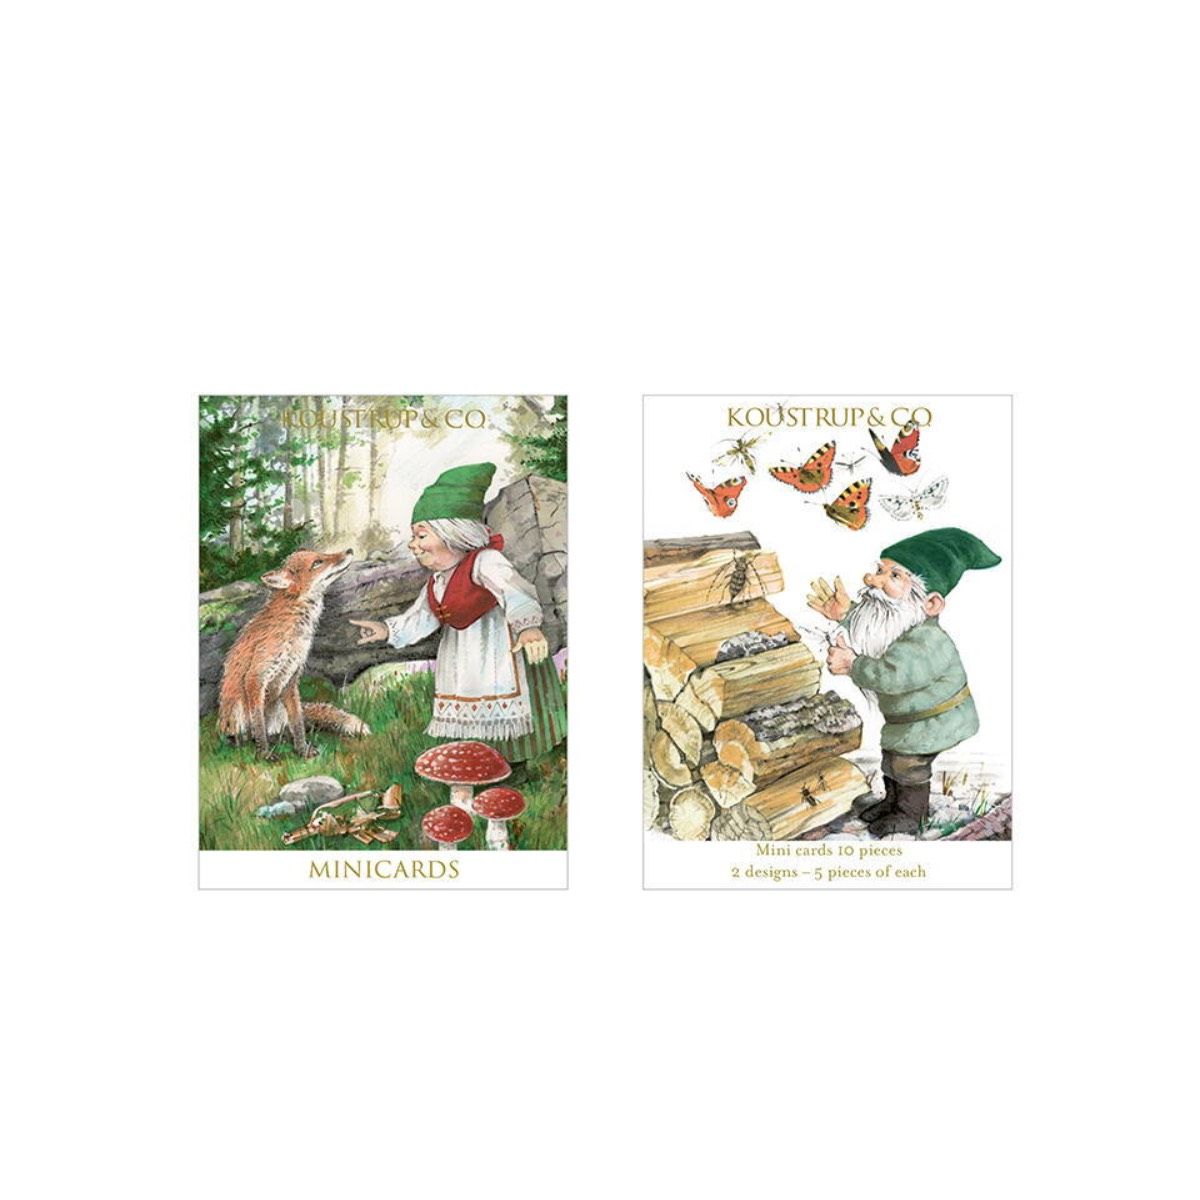 Julekort illustreret med nisser fra Koustrup & Co. inkl. kuverter